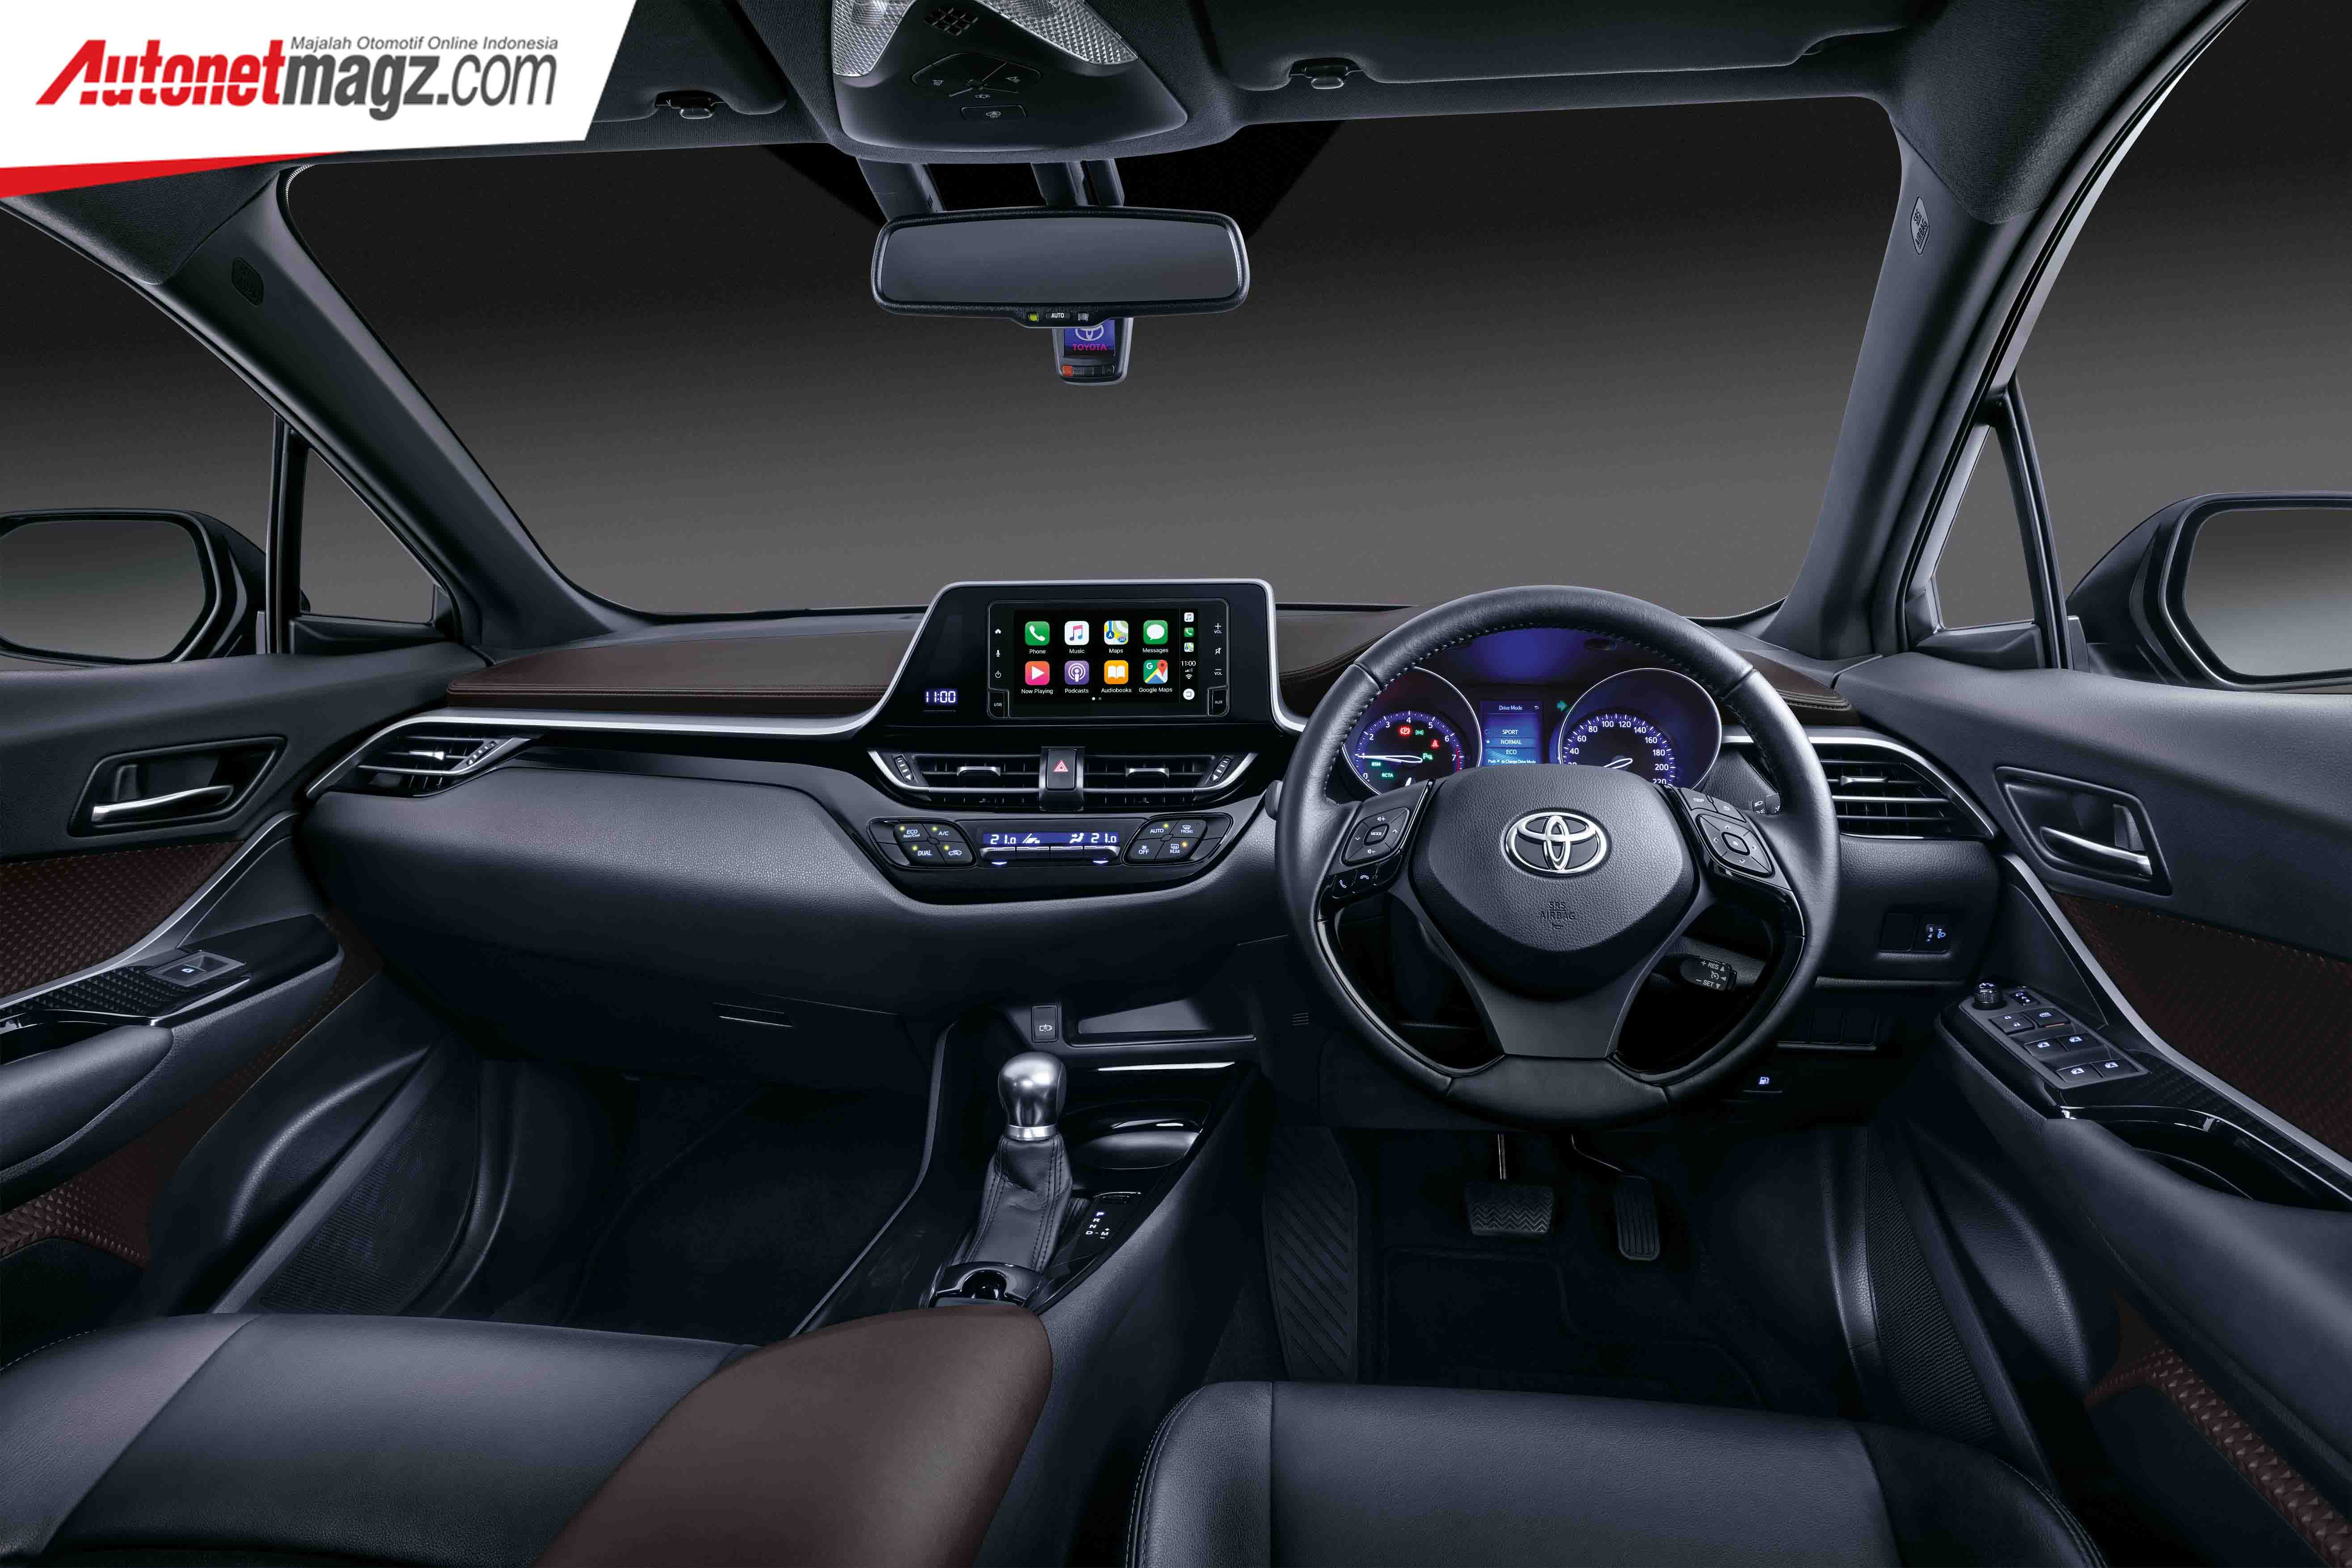  Toyota  C HR  2021  interior AutonetMagz Review Mobil  